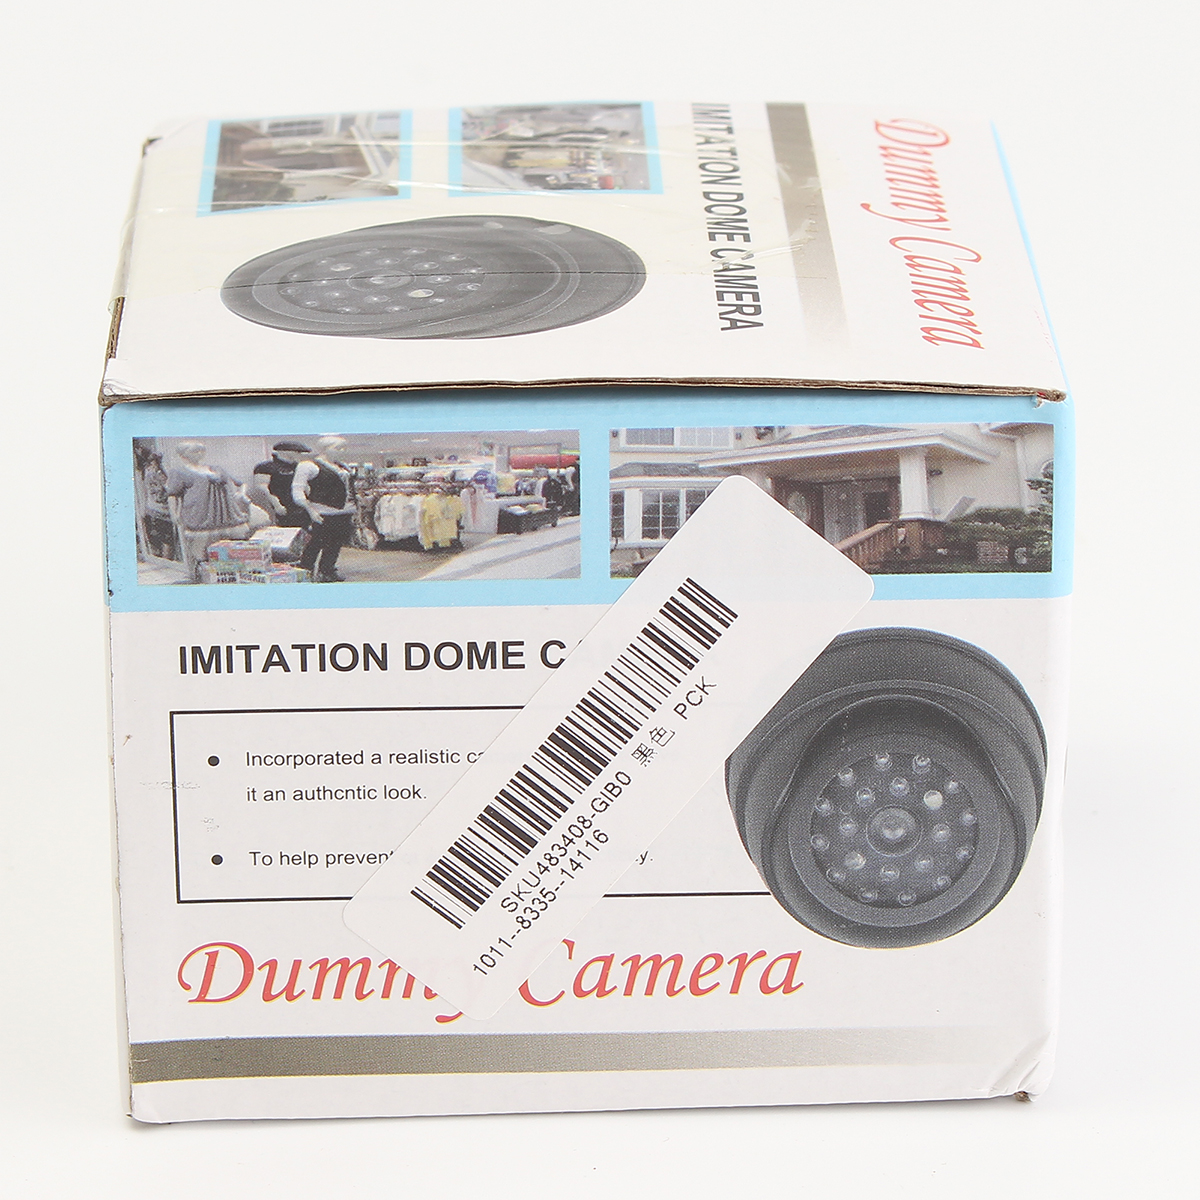 25-LED-IR-Color-Night-Video-Dome-Fake-CCTV-Camera-Home-Security-Surveillan-1105961